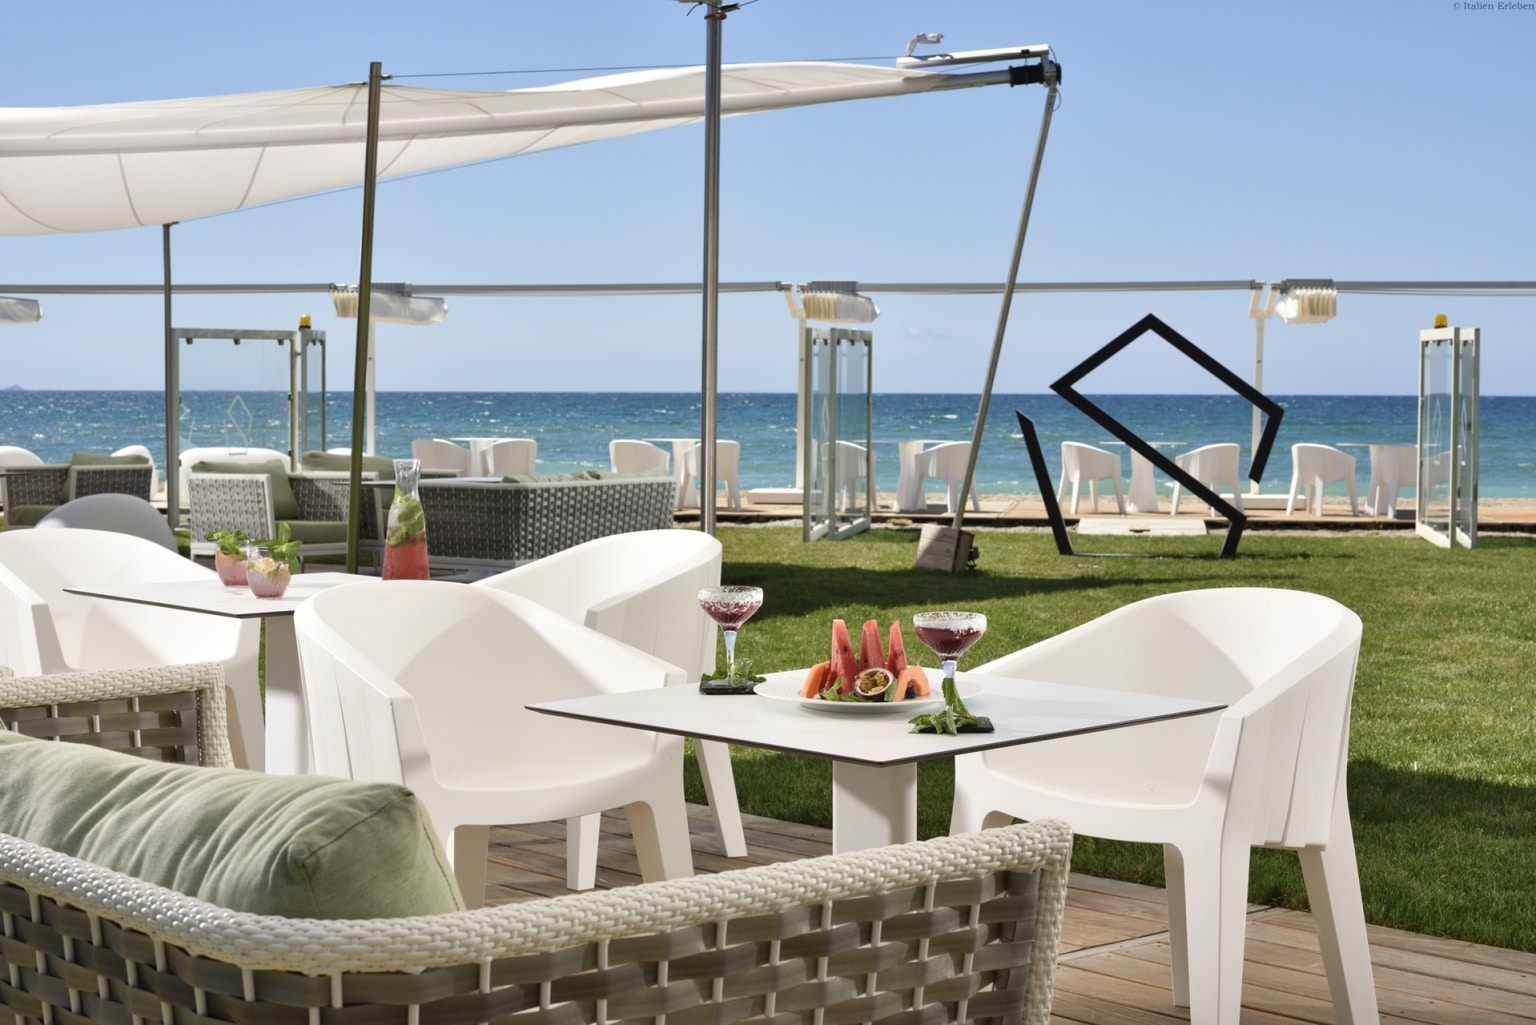 Toskana Hotel The Sense Experience Resort Follonica Maremma direkt Meer Pinien Strand Sand Beach Club